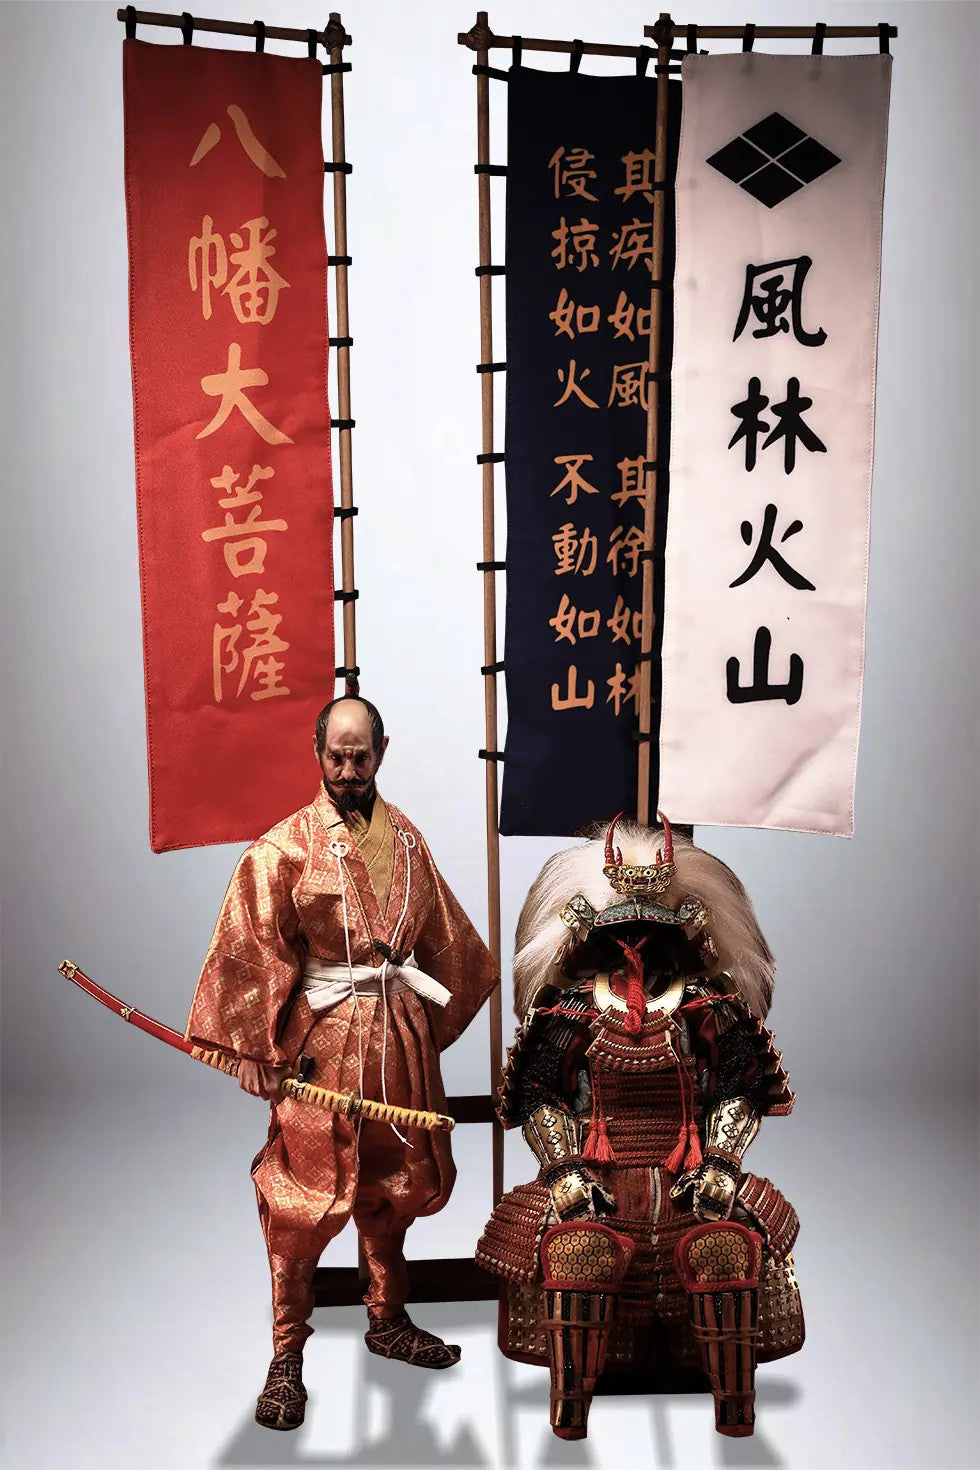 CooModel - Empire Legends EL013 - Takeda Shingen Tiger of Kai (Deluxe Ed.)